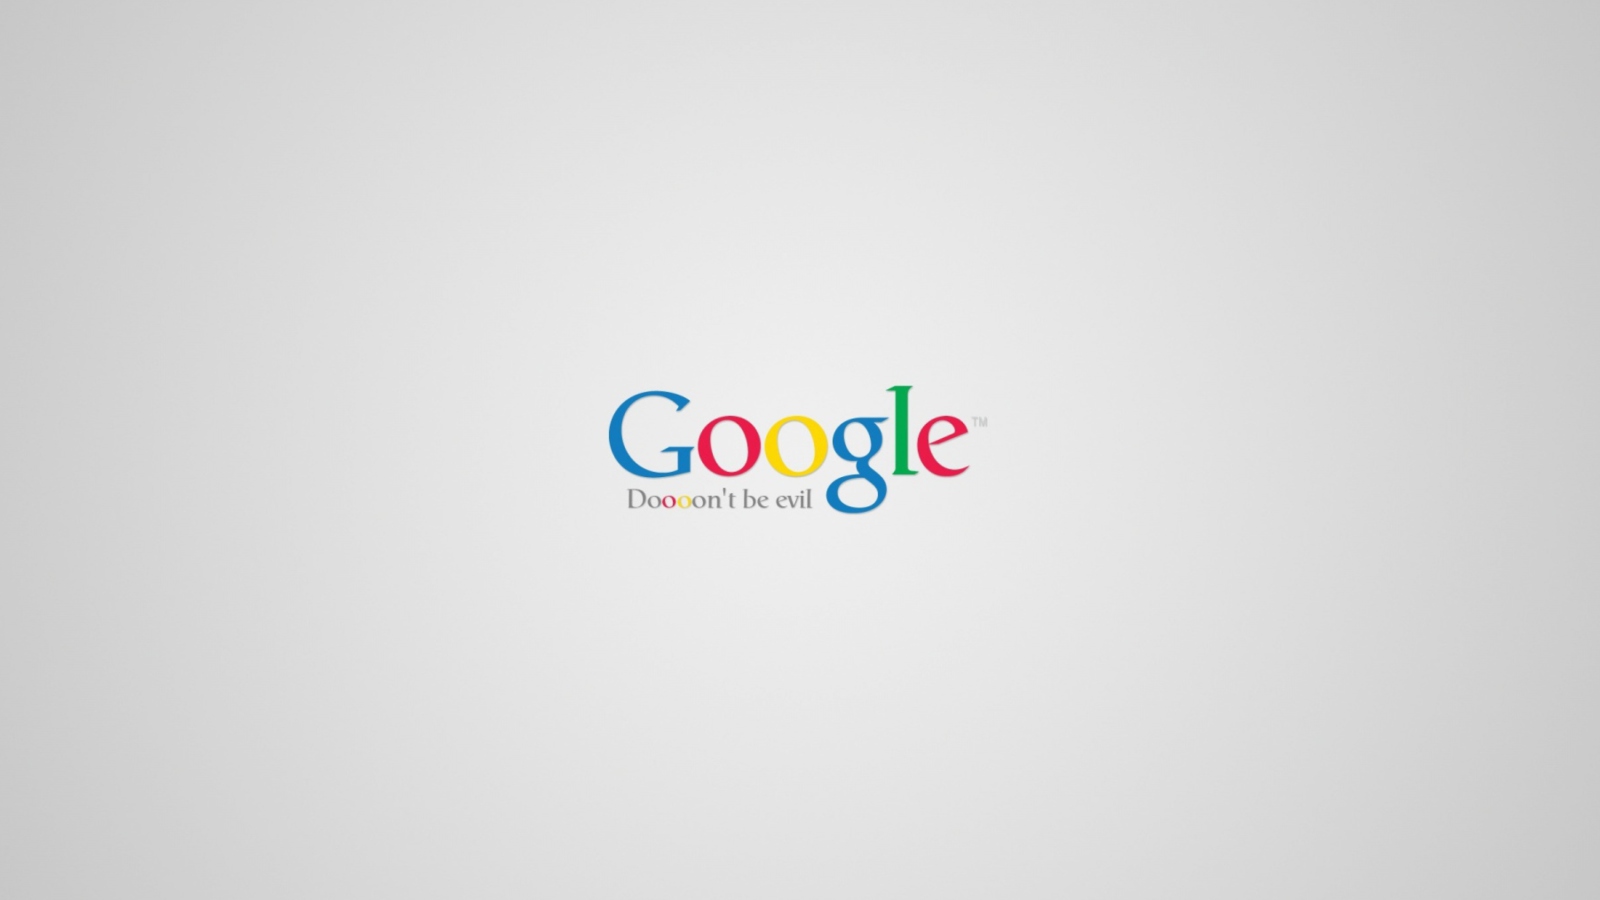 Google - Don't be evil wallpaper 1600x900